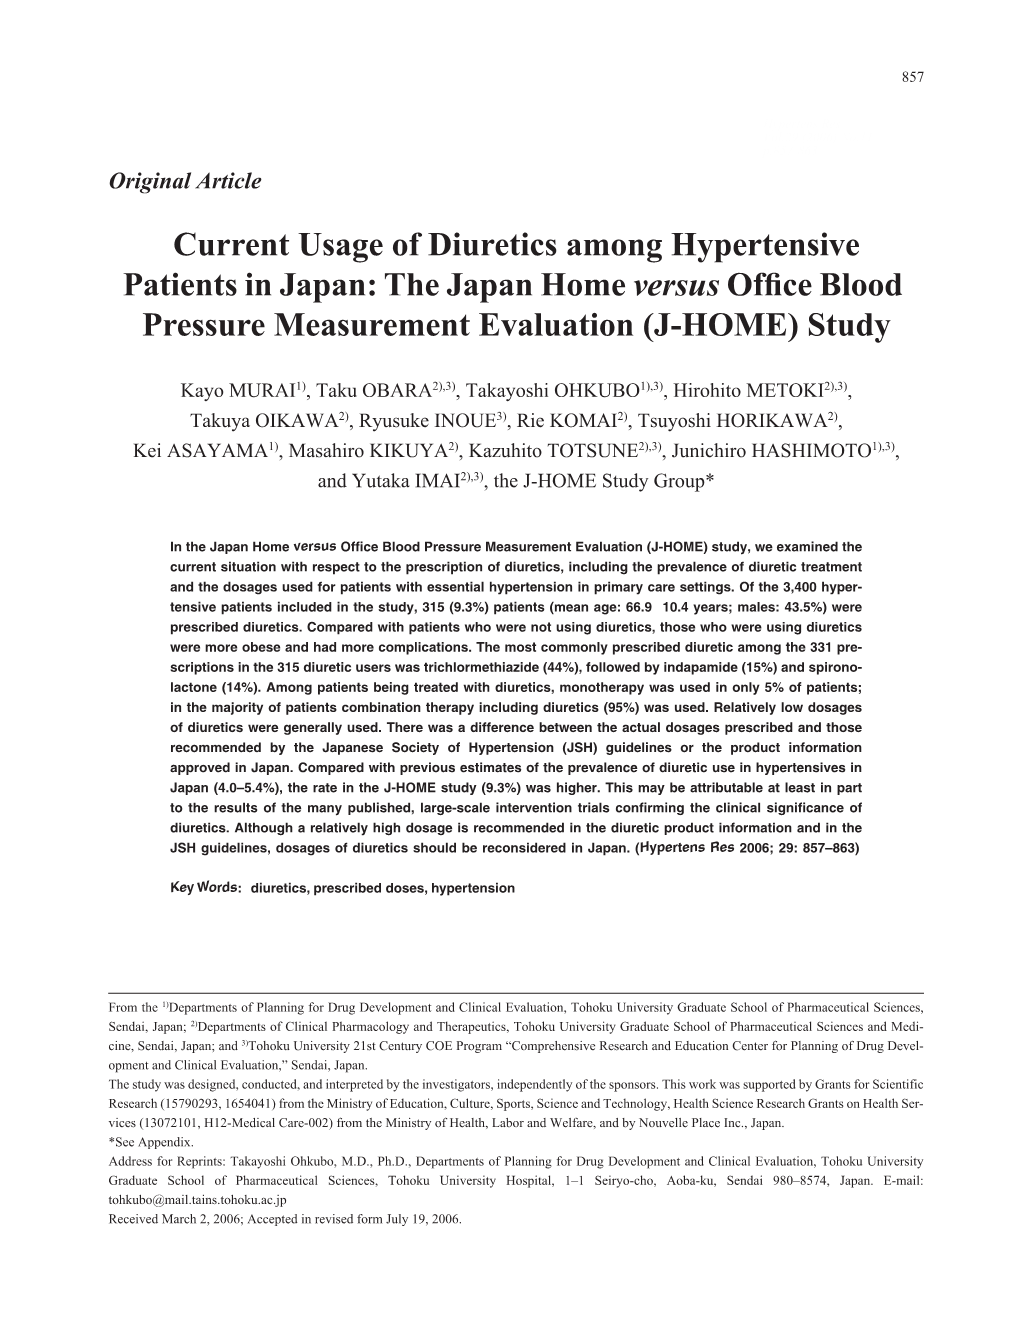 Current Usage of Diuretics Among Hypertensive Patients in Japan: the Japan Home Versus Ofﬁce Blood Pressure Measurement Evaluation (J-HOME) Study